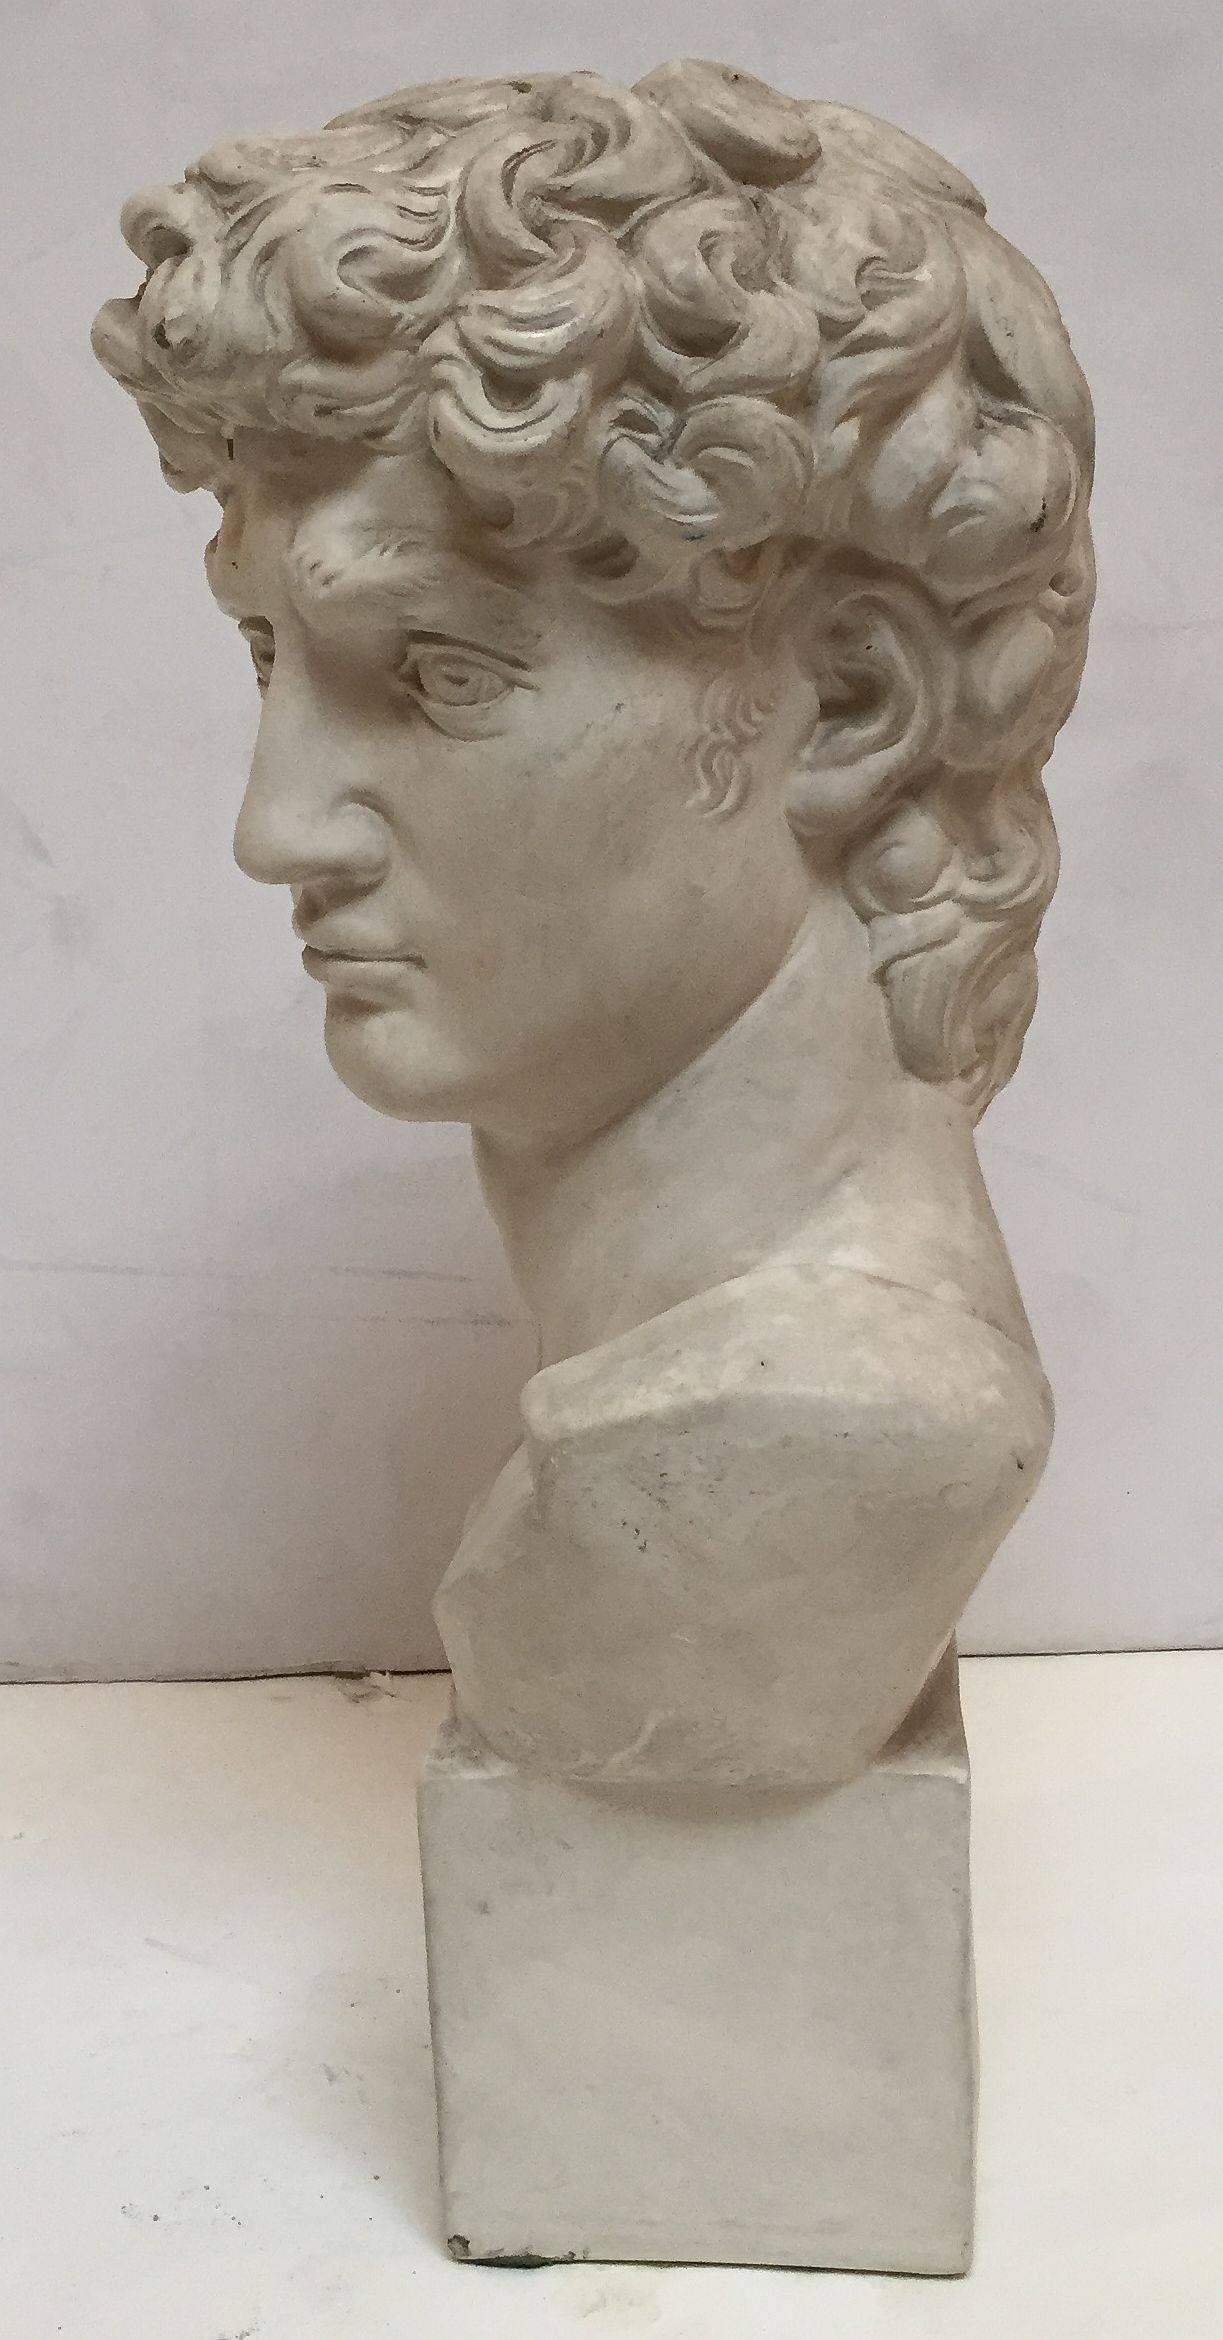 20th Century English Plaster Bust of Michelangelo's David